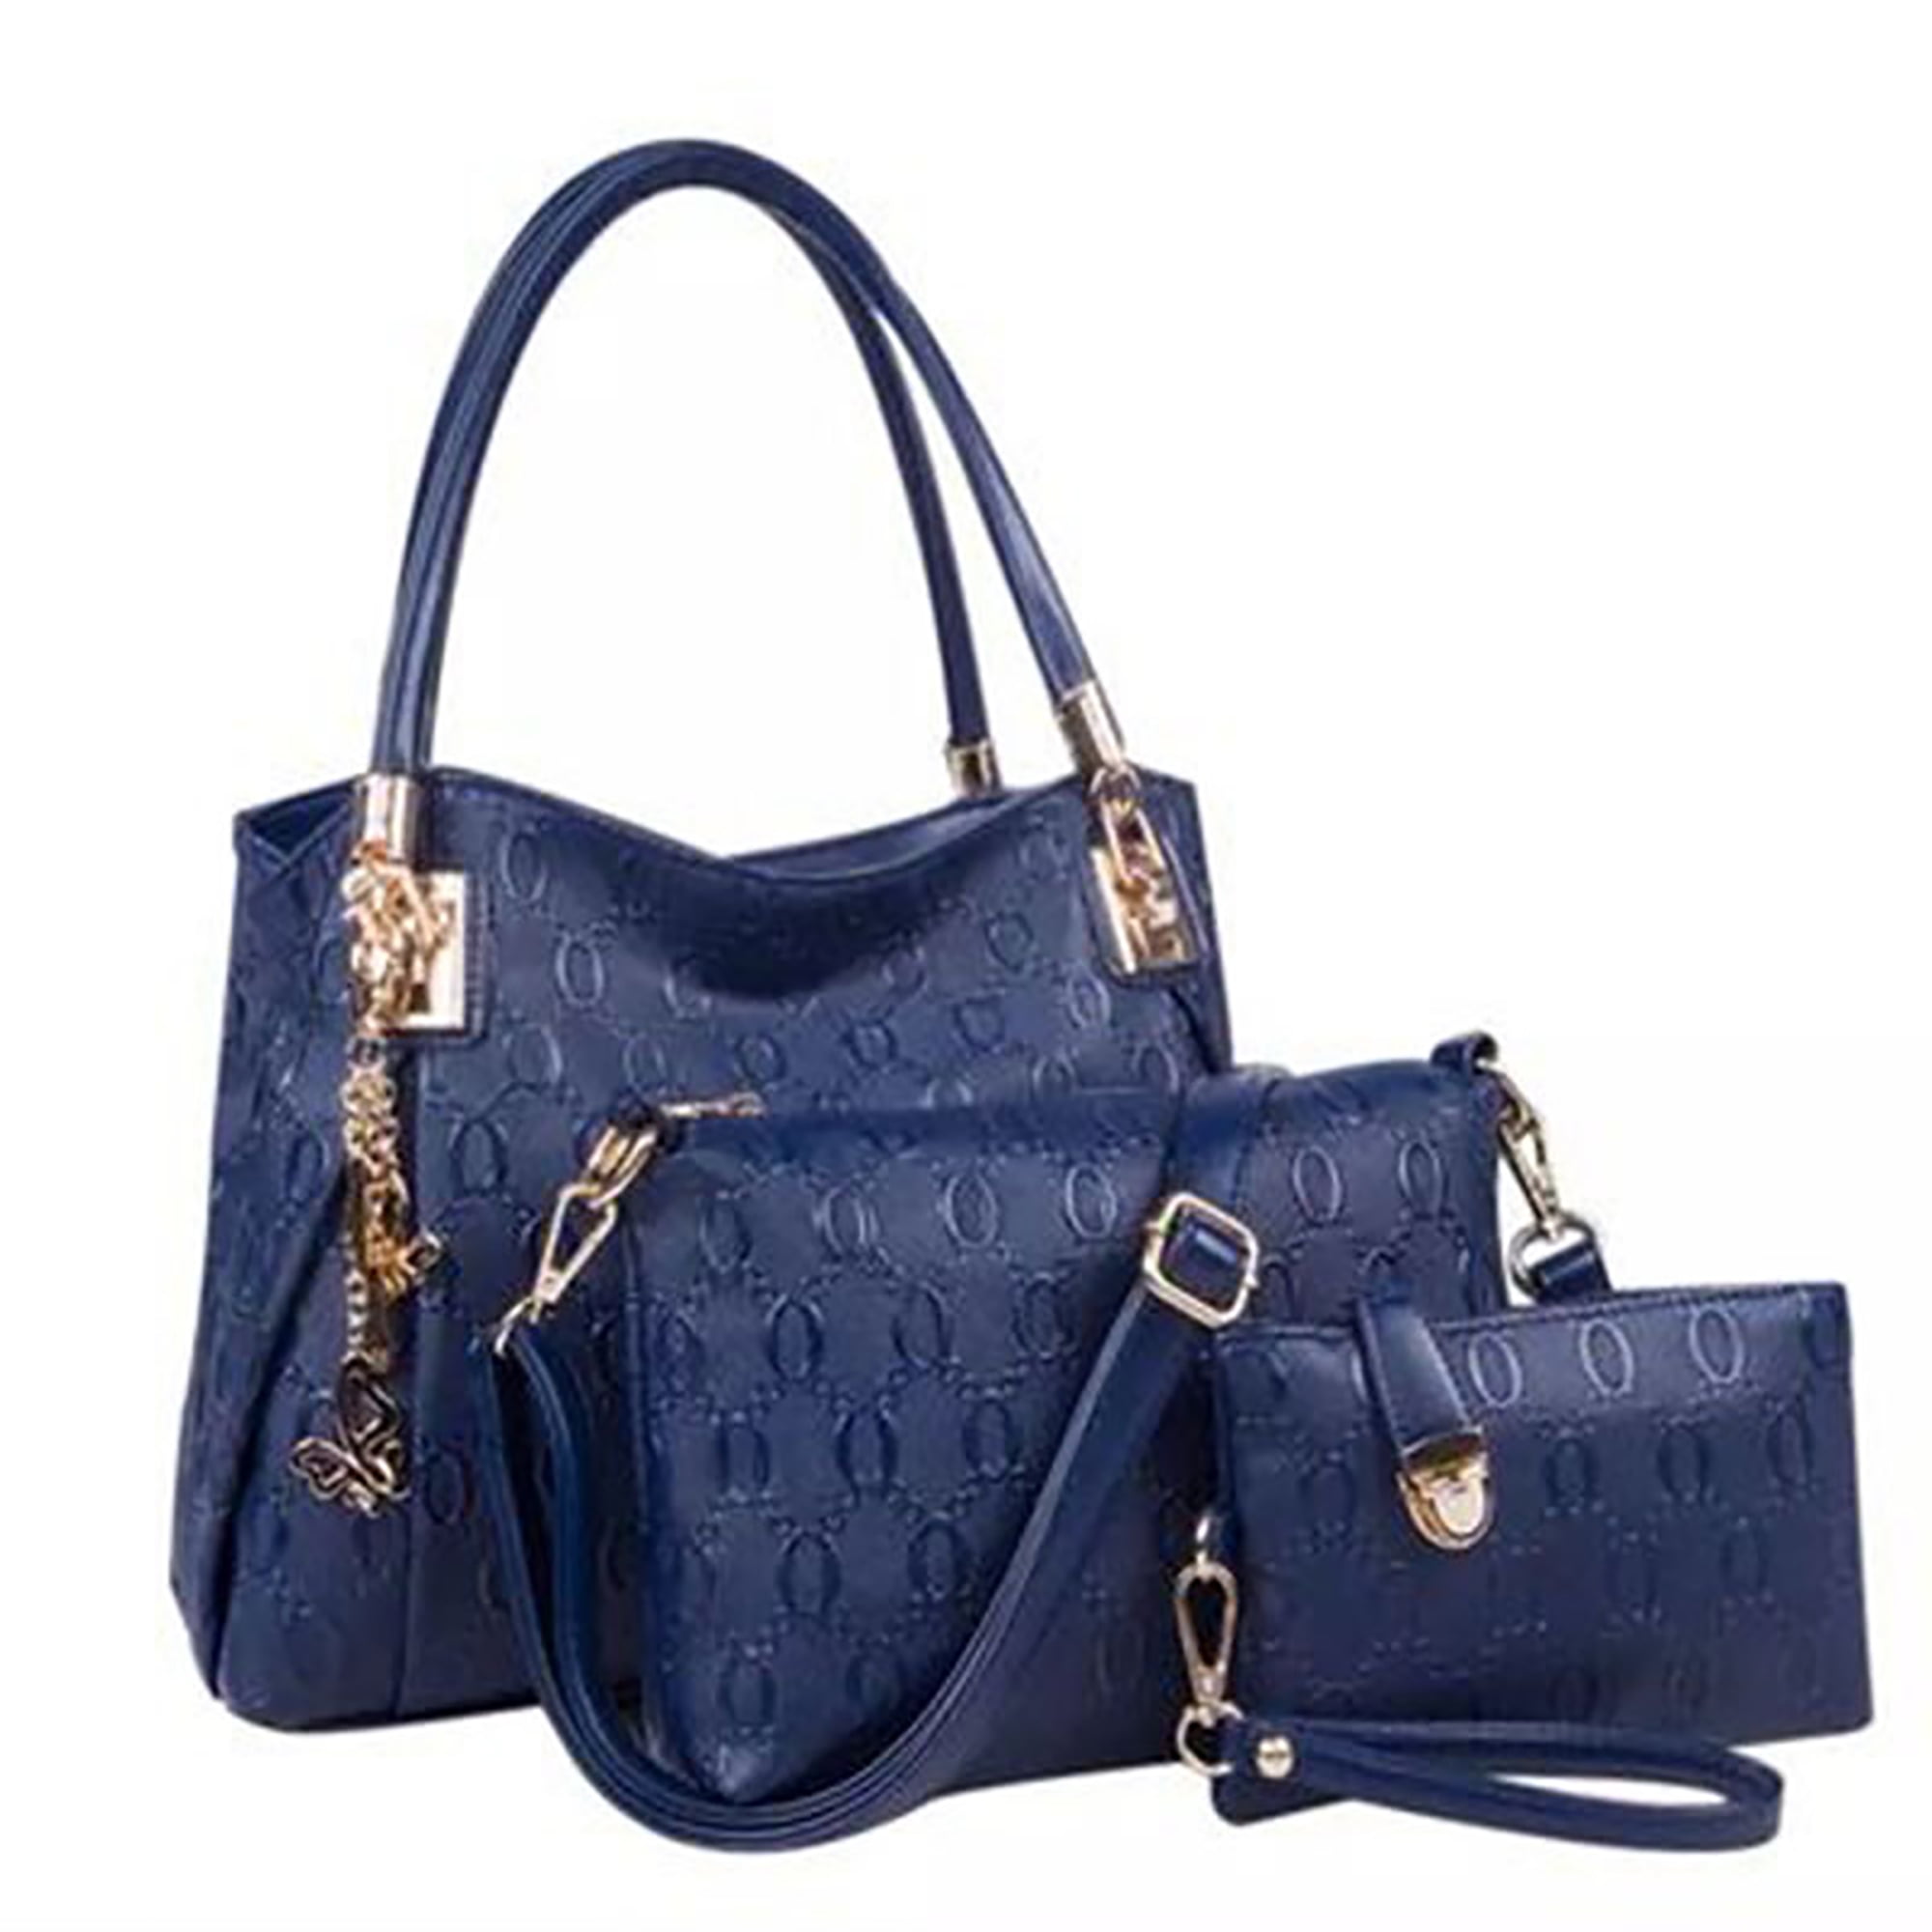 Handbag for Women, GMYLE Embossed Pattern PU Leather Shoulder